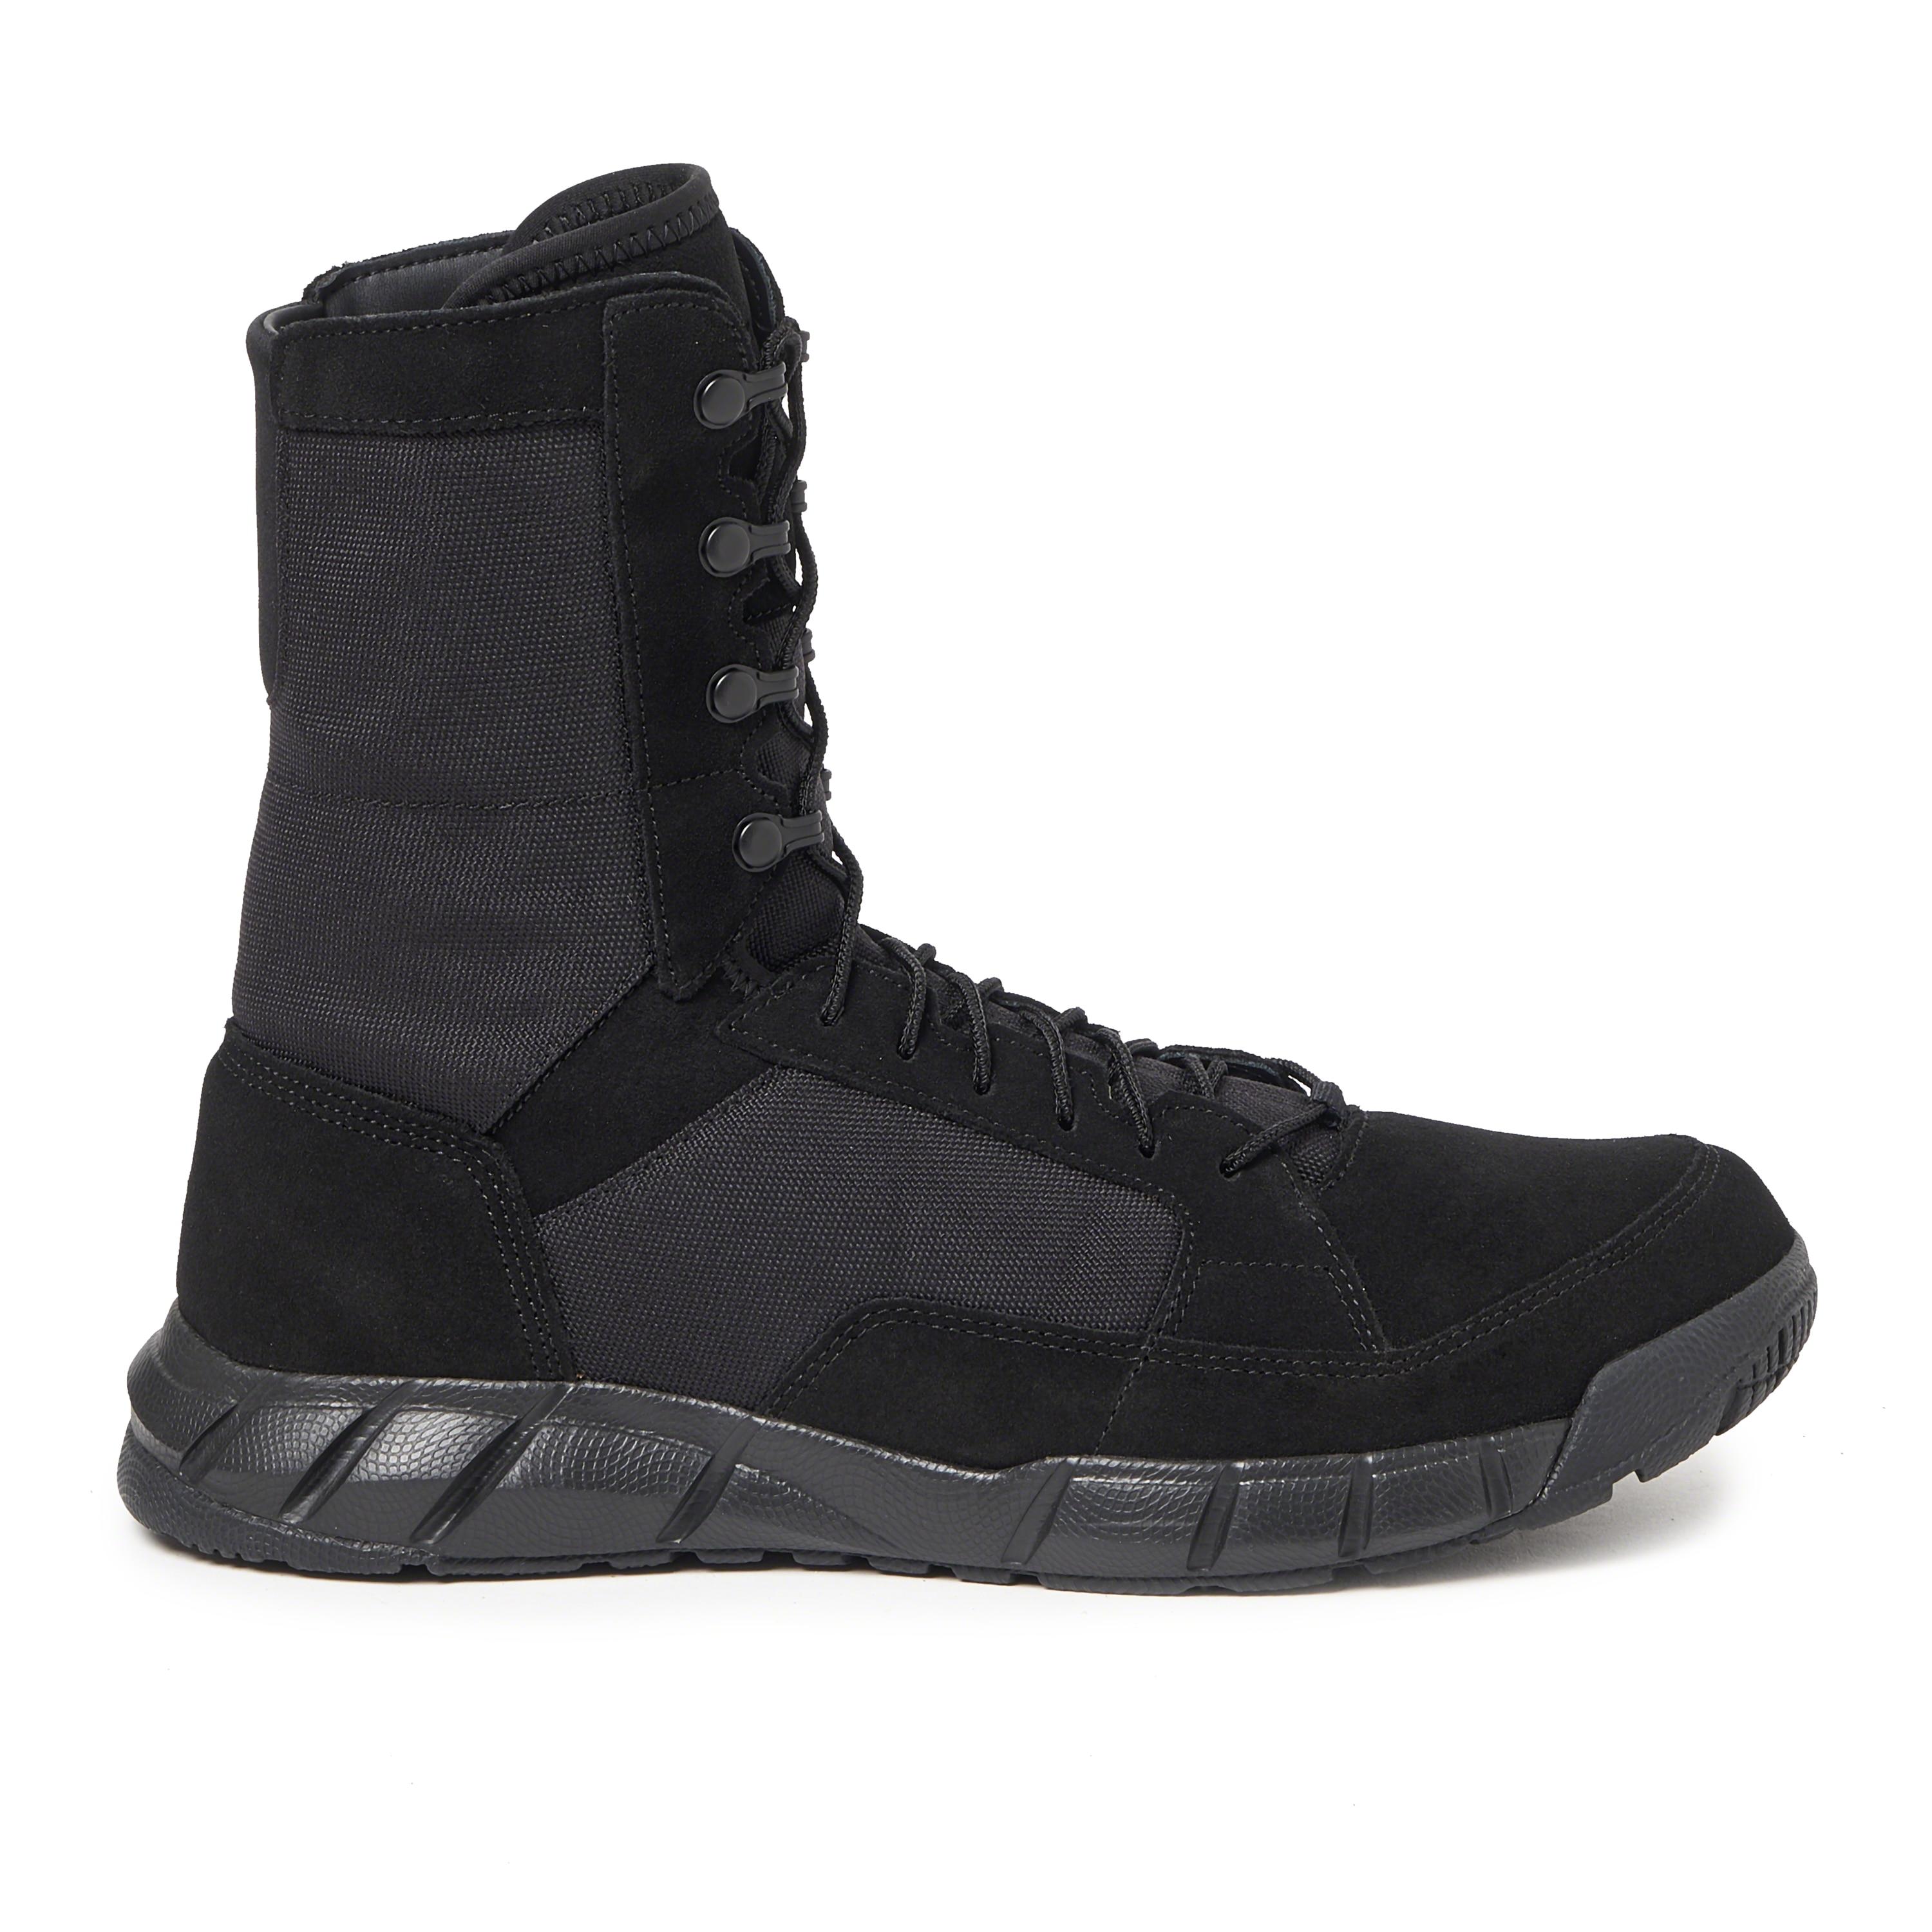 Oakley Synthetic Light Assault Boot 2 in Black for Men - Lyst